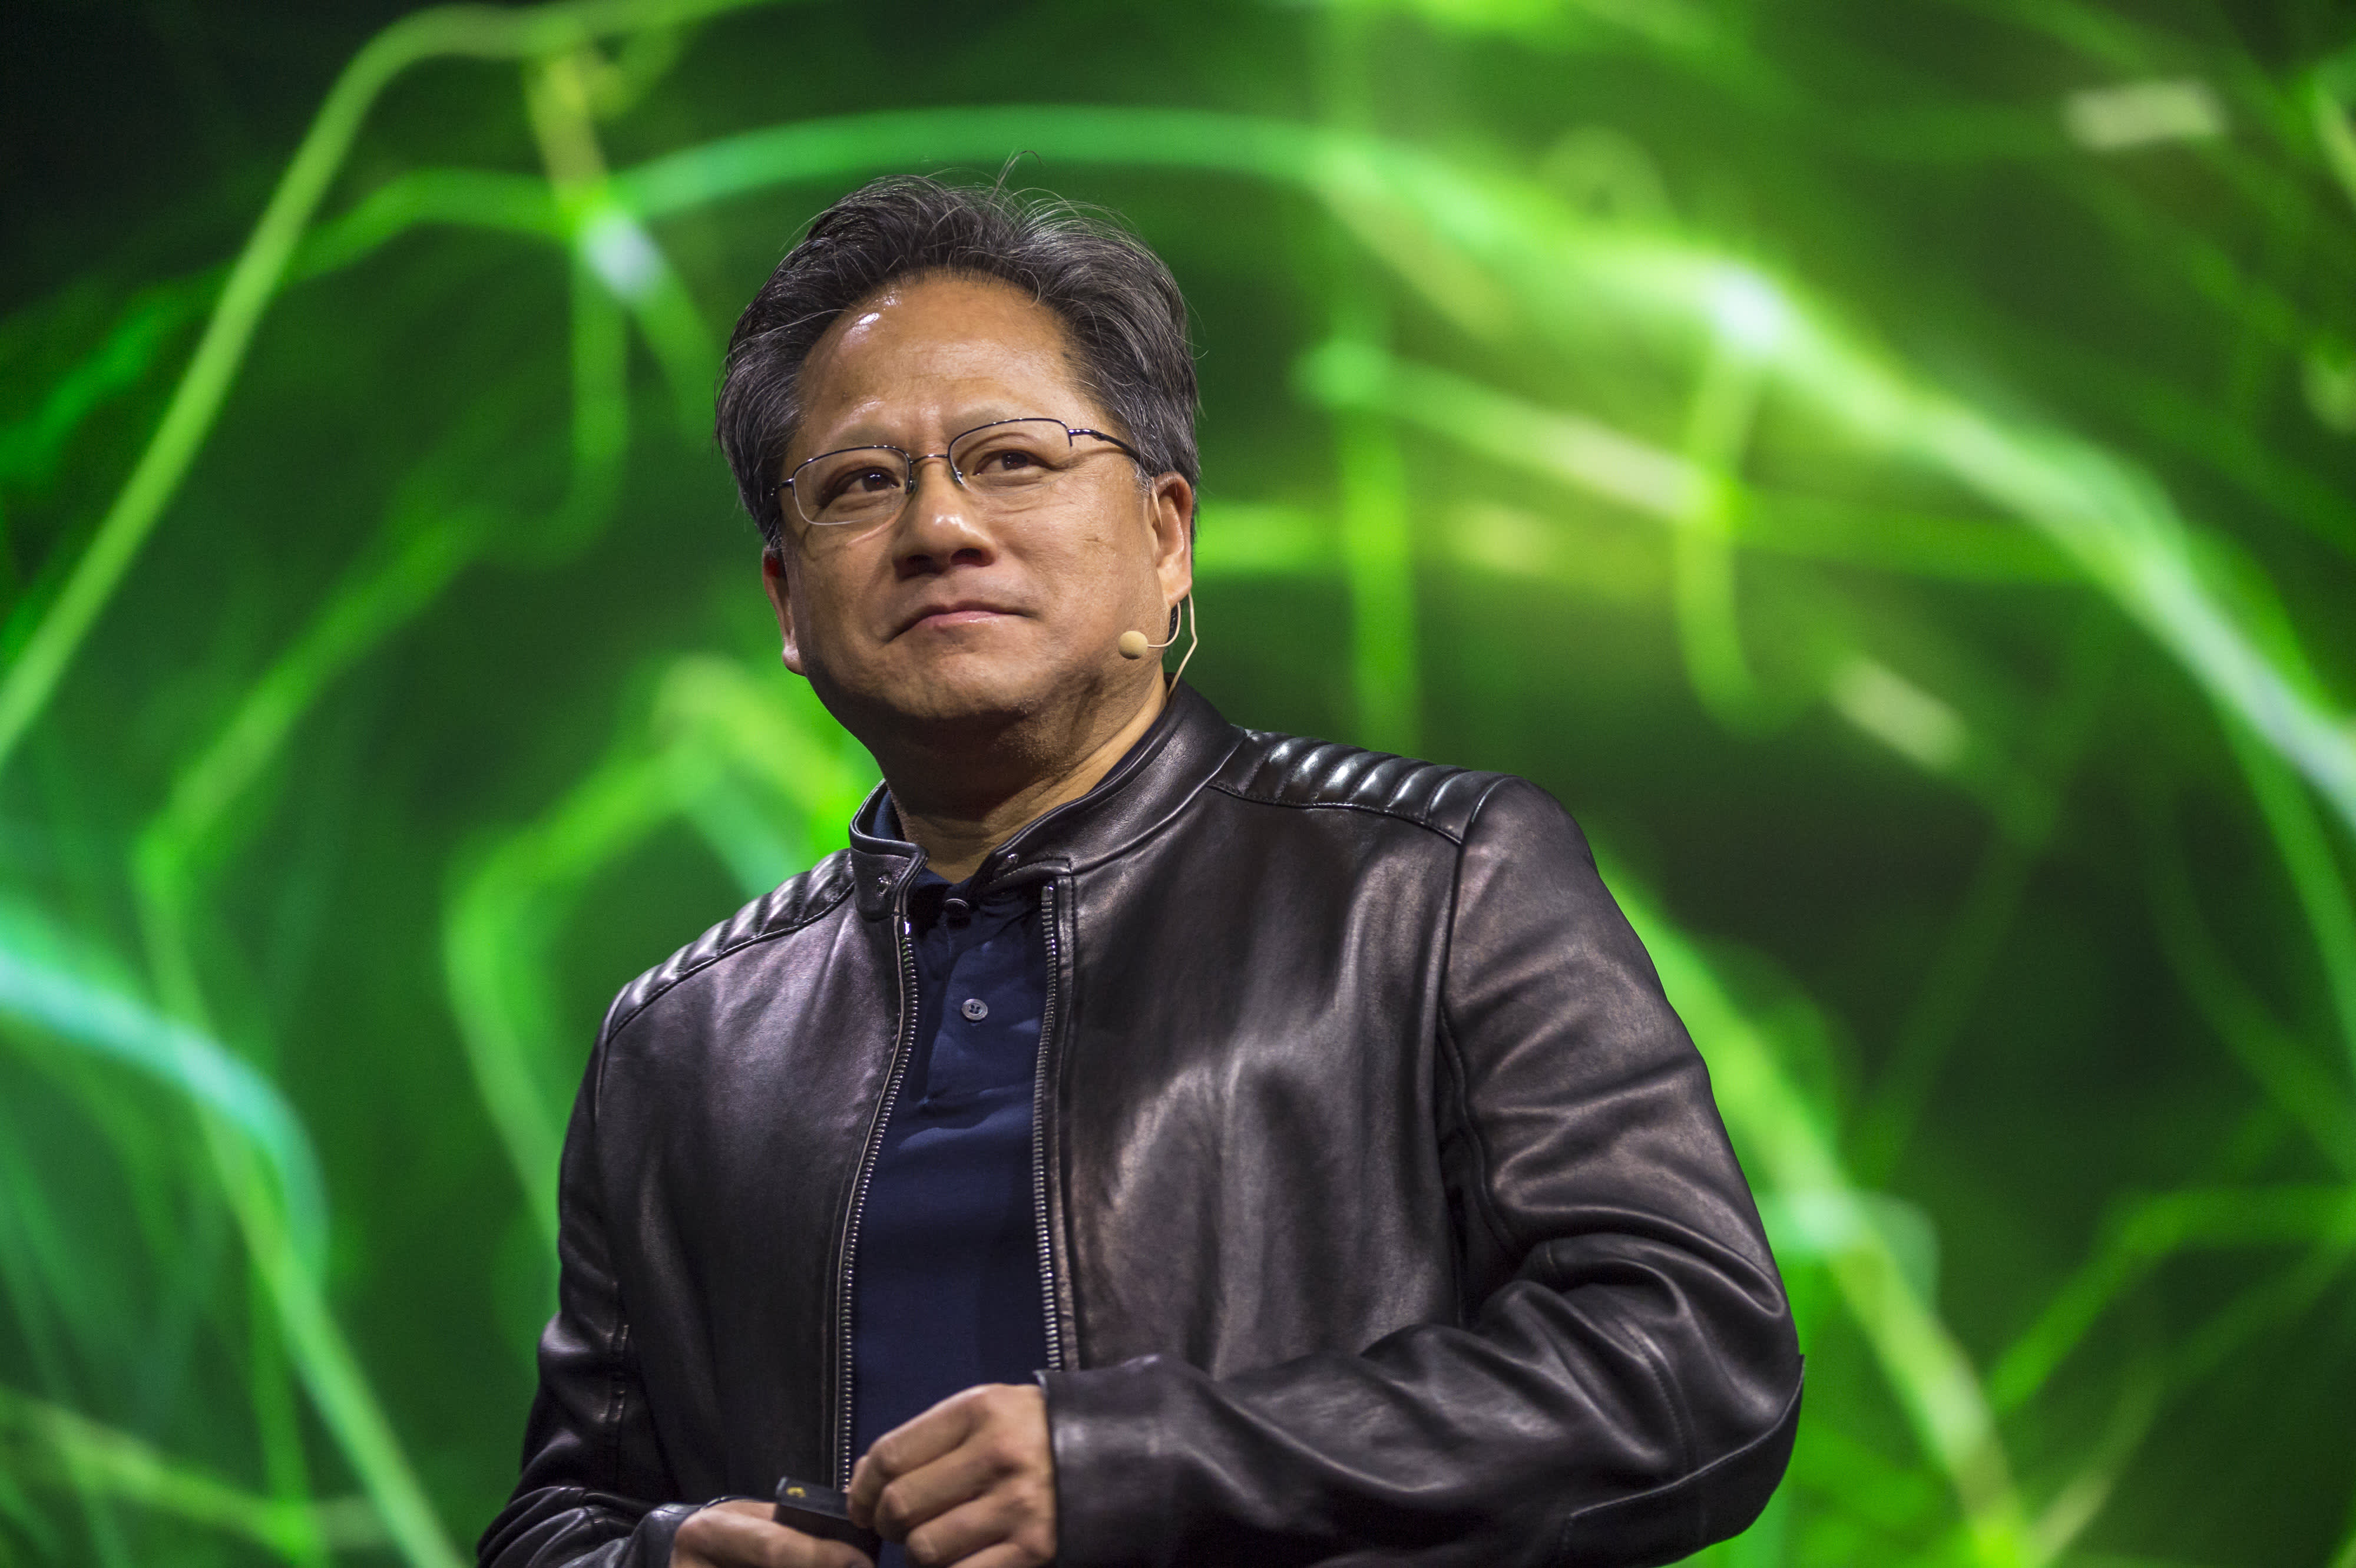 Nvidia CEO သည် ဂရပ်ဖစ်ကတ်အသစ်များ စတင်ထွက်ရှိတော့မည်ဖြစ်သောကြောင့် ဂိမ်းကစားခြင်းအတွက် ရင်းနှီးမြှုပ်နှံသူများ၏ စိတ်ပူပန်မှုကို သက်သာစေရန် ကြိုးစားနေပါသည်။